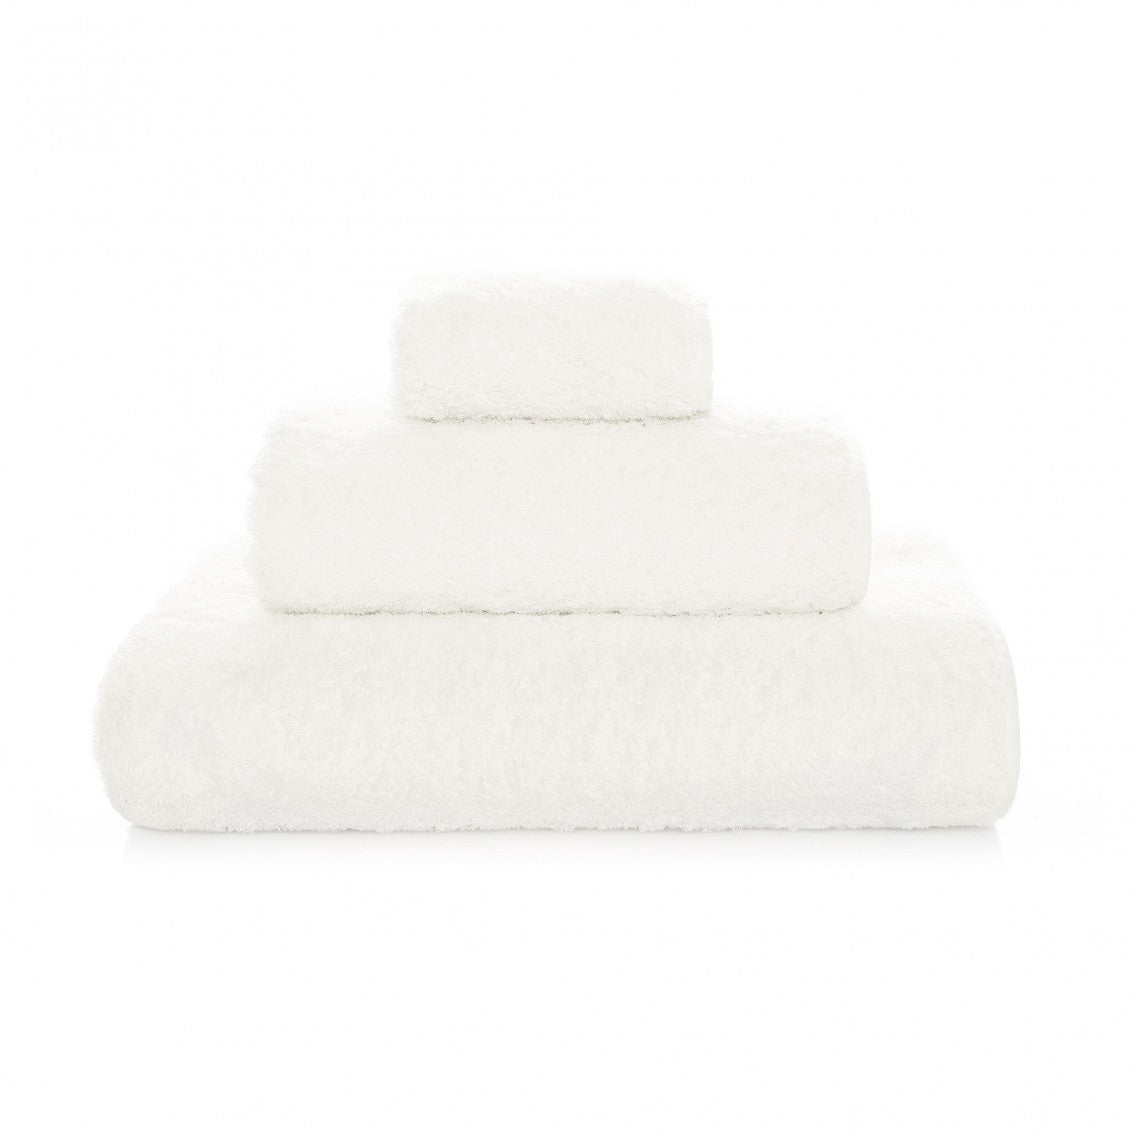 Graccioza Egoist Snow Bath Sheet at Luxurious Beds and Linens